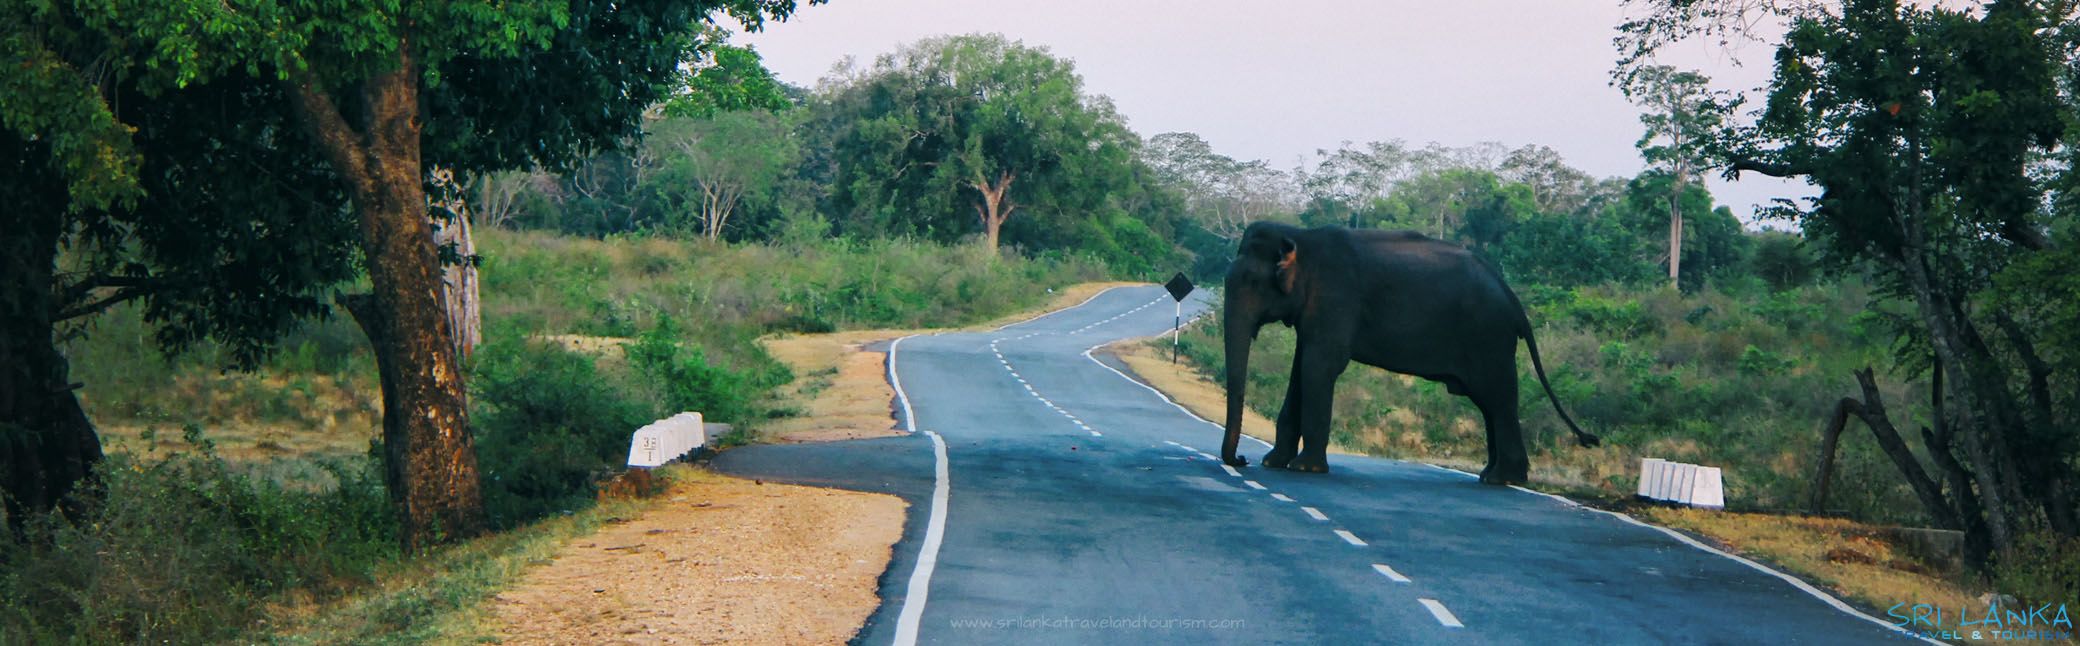 Sri Lanka Wild Elephant